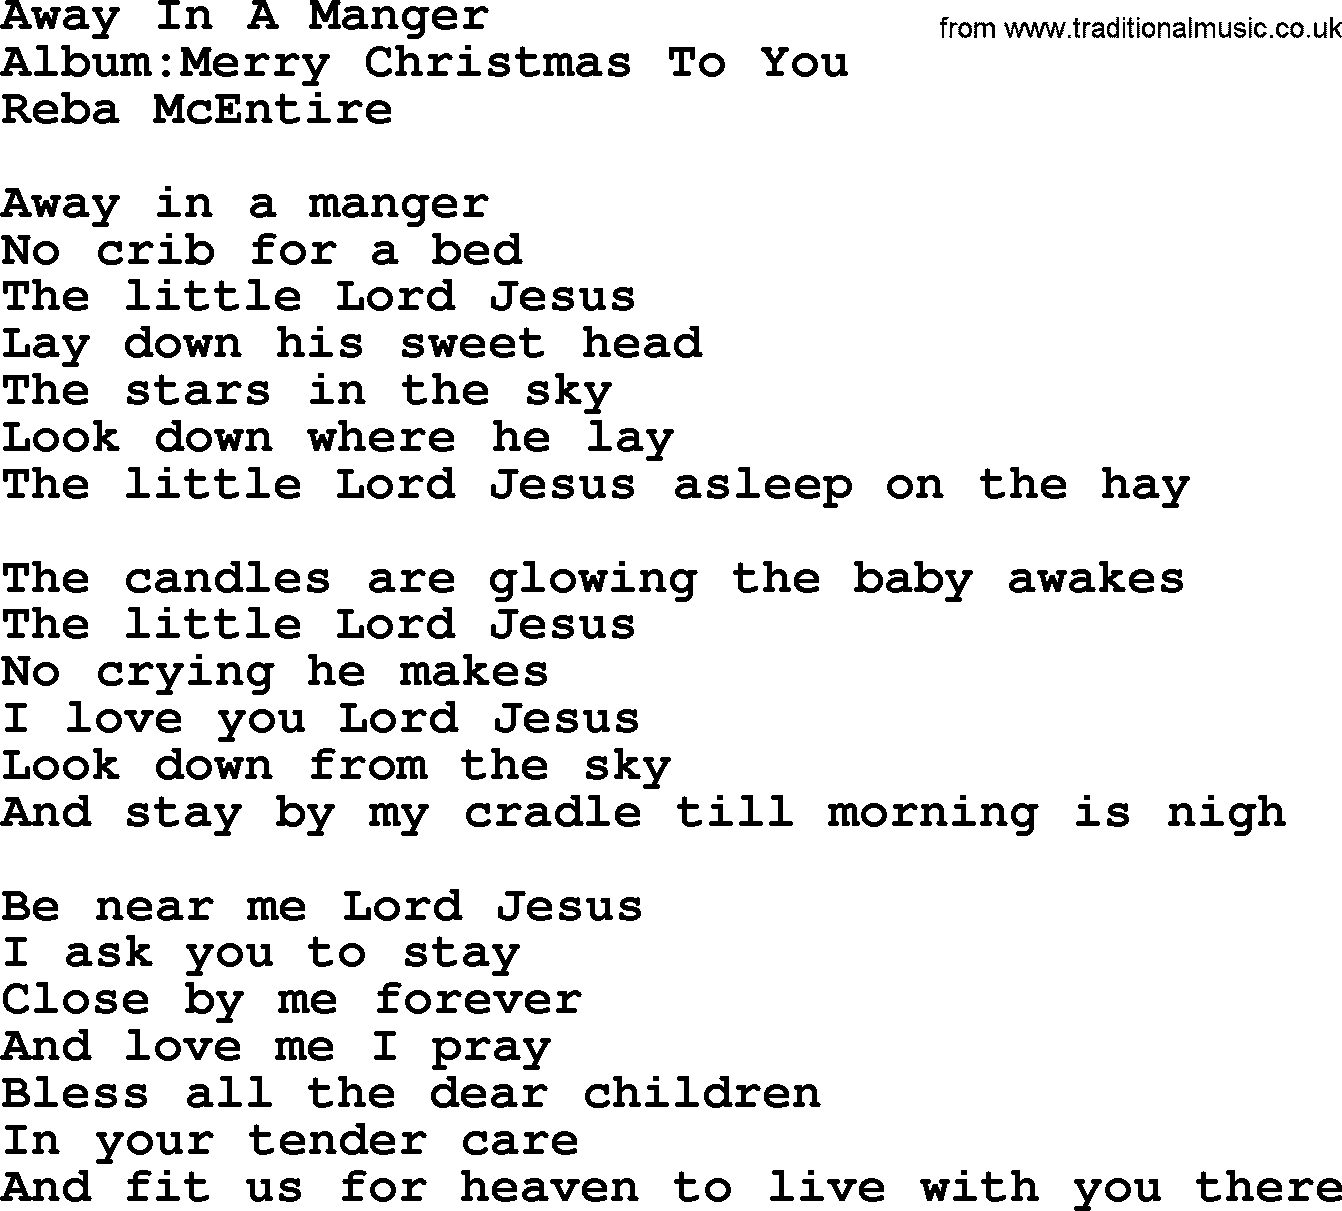 Reba McEntire song: Away In A Manger lyrics